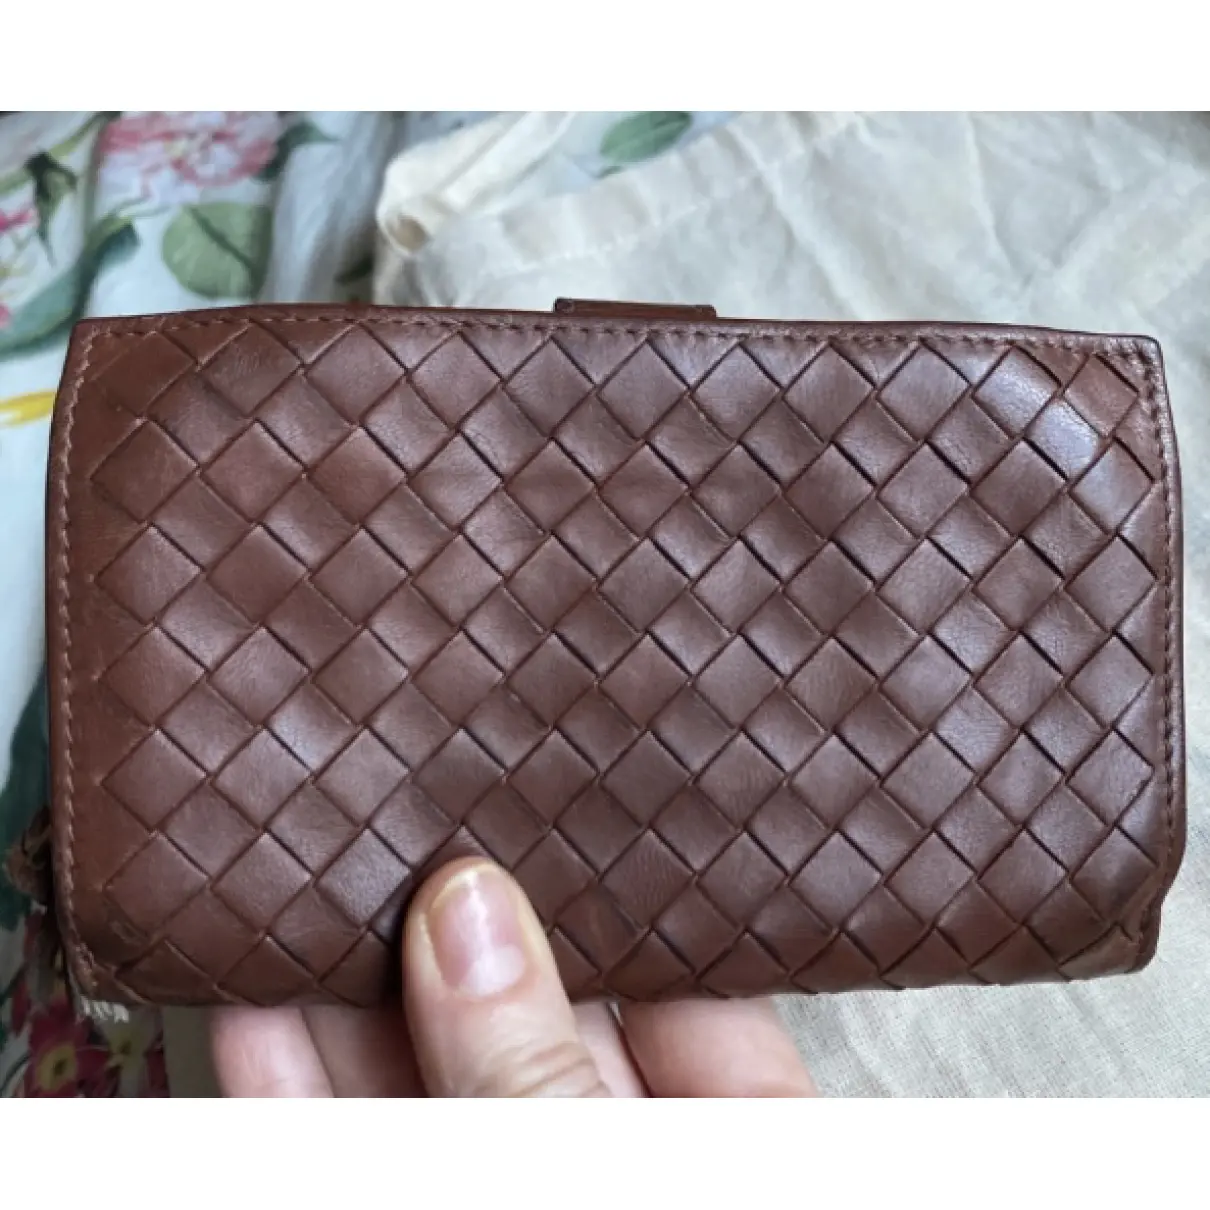 Buy Bottega Veneta Intrecciato leather wallet online